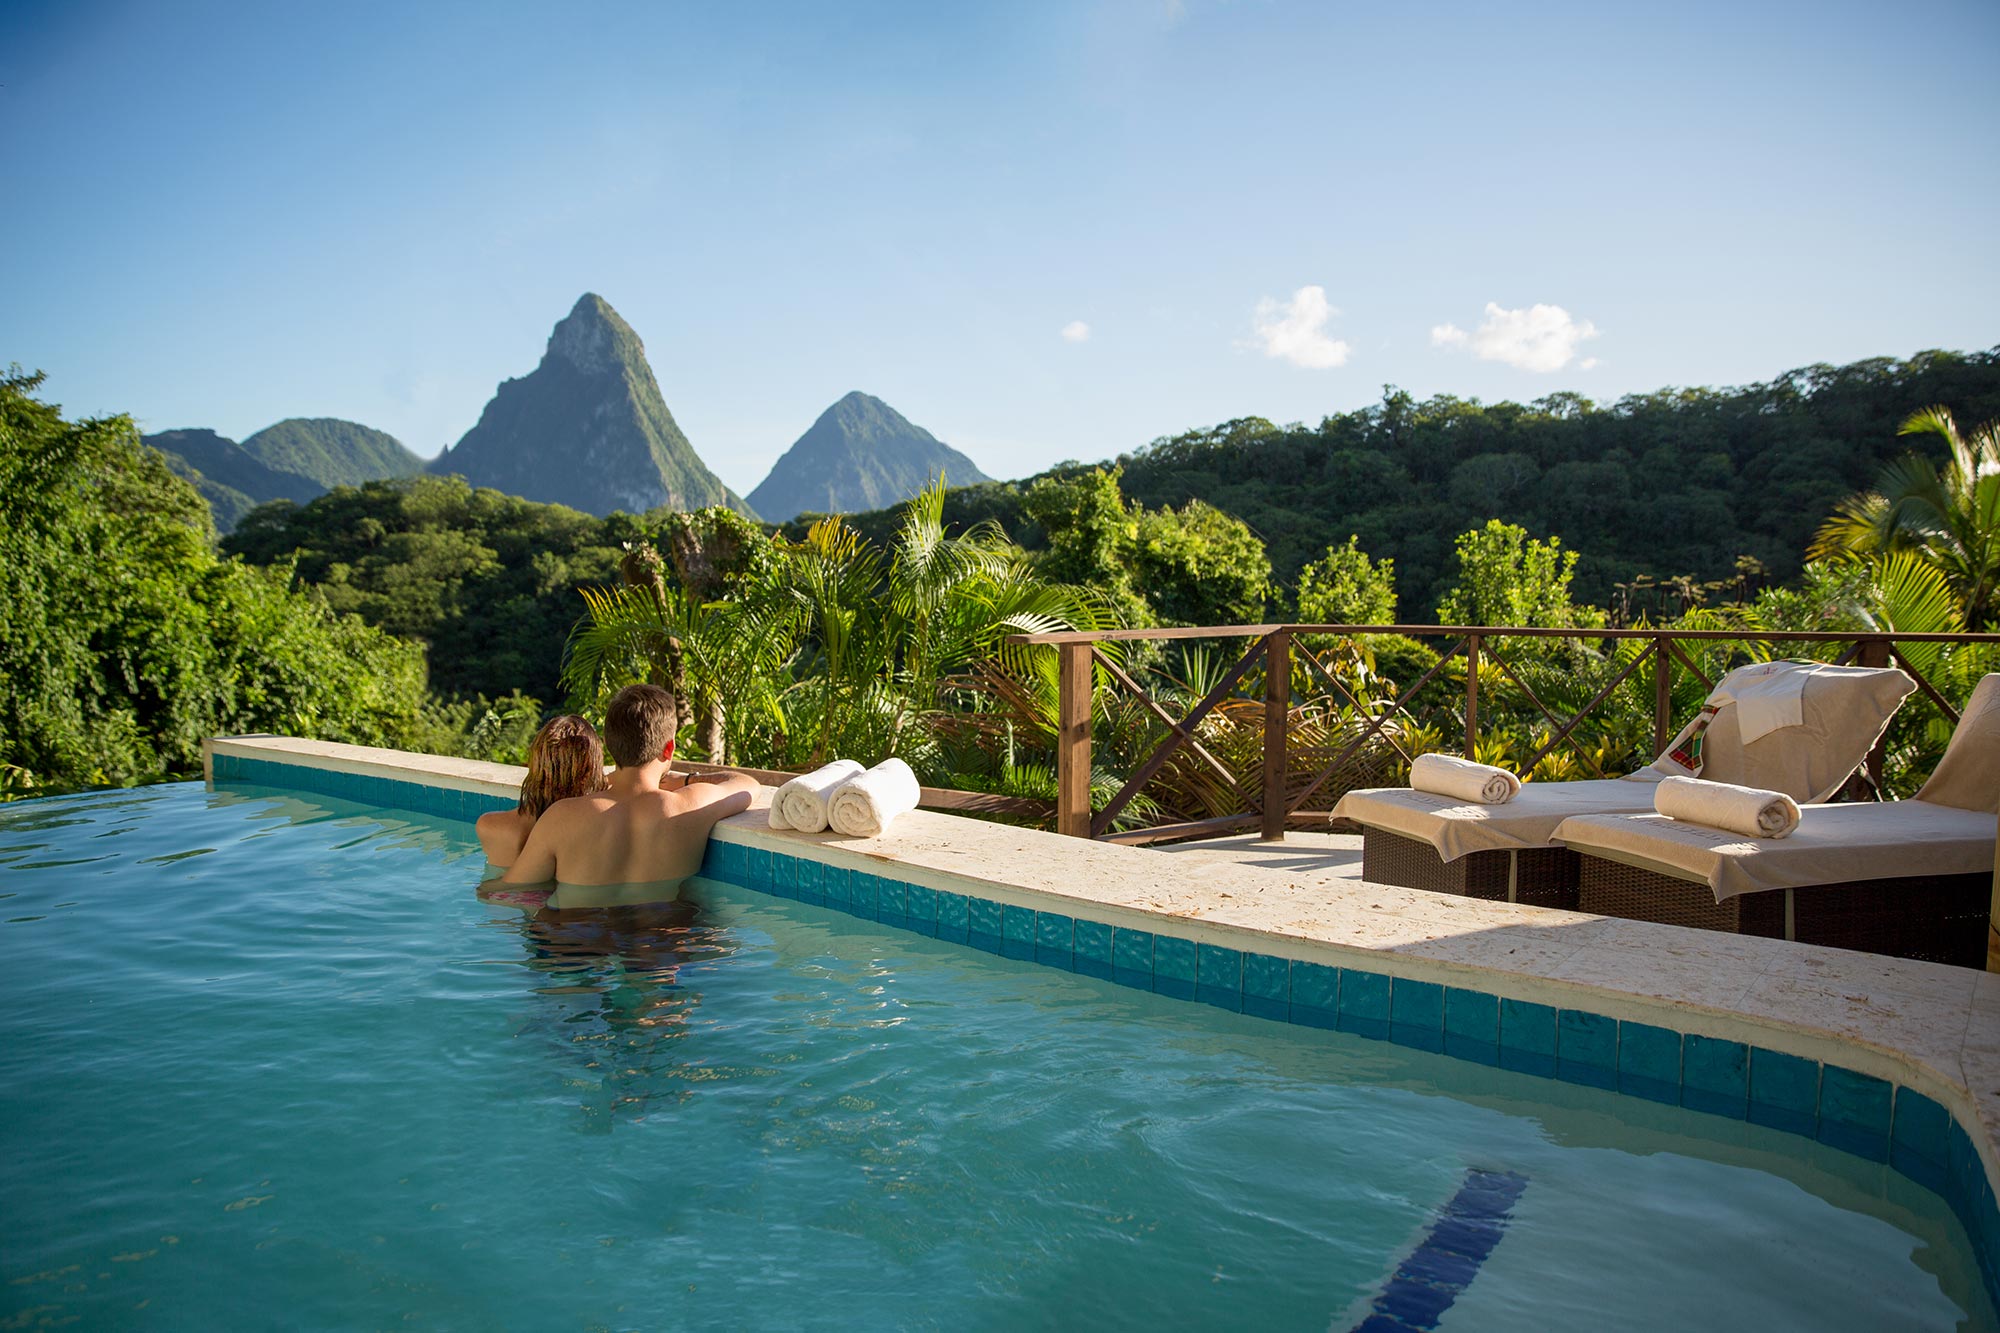 St. Lucia Honeymoon Guide: Anse Chastanet